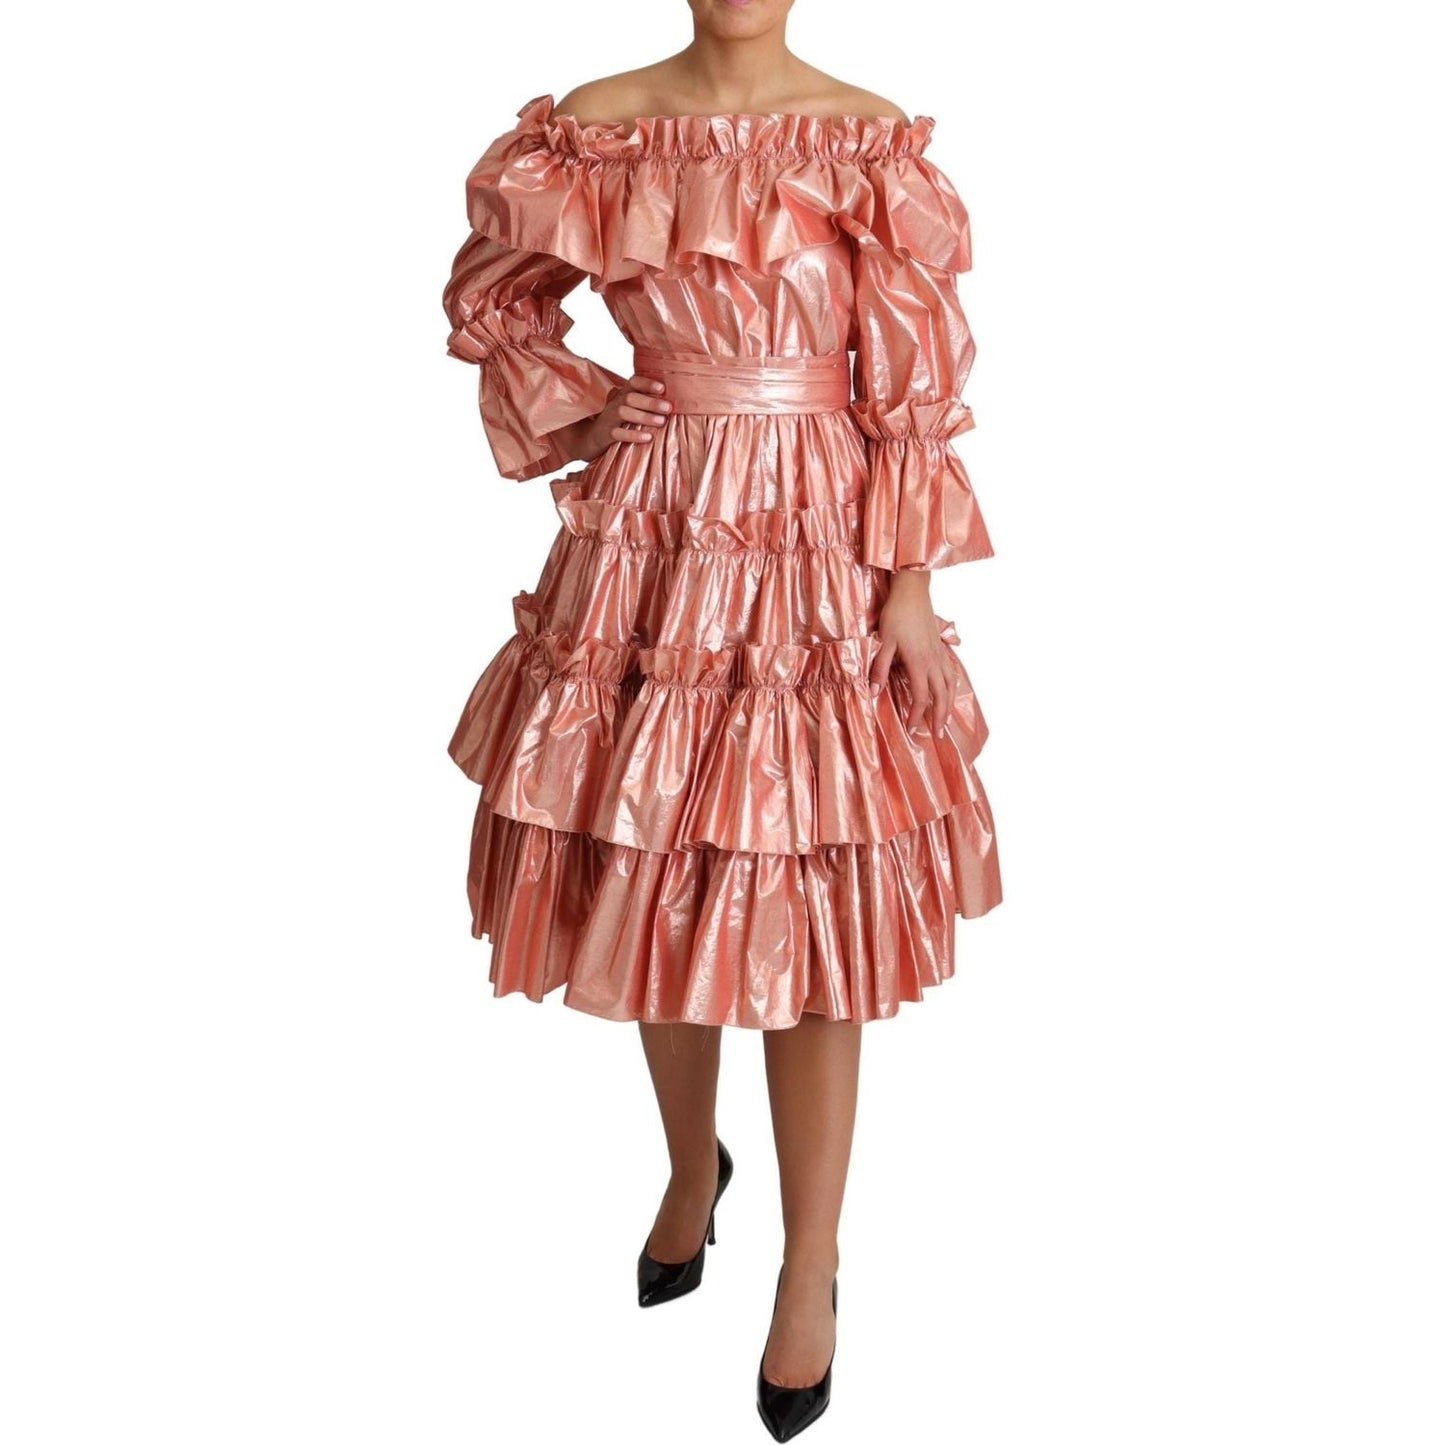 Dolce & Gabbana Pink Metallic Ruffled Gown Elegance pink-ruffled-dress-silk-cotton-gown-dress IMG_0898-scaled-1f042de9-a25.jpg